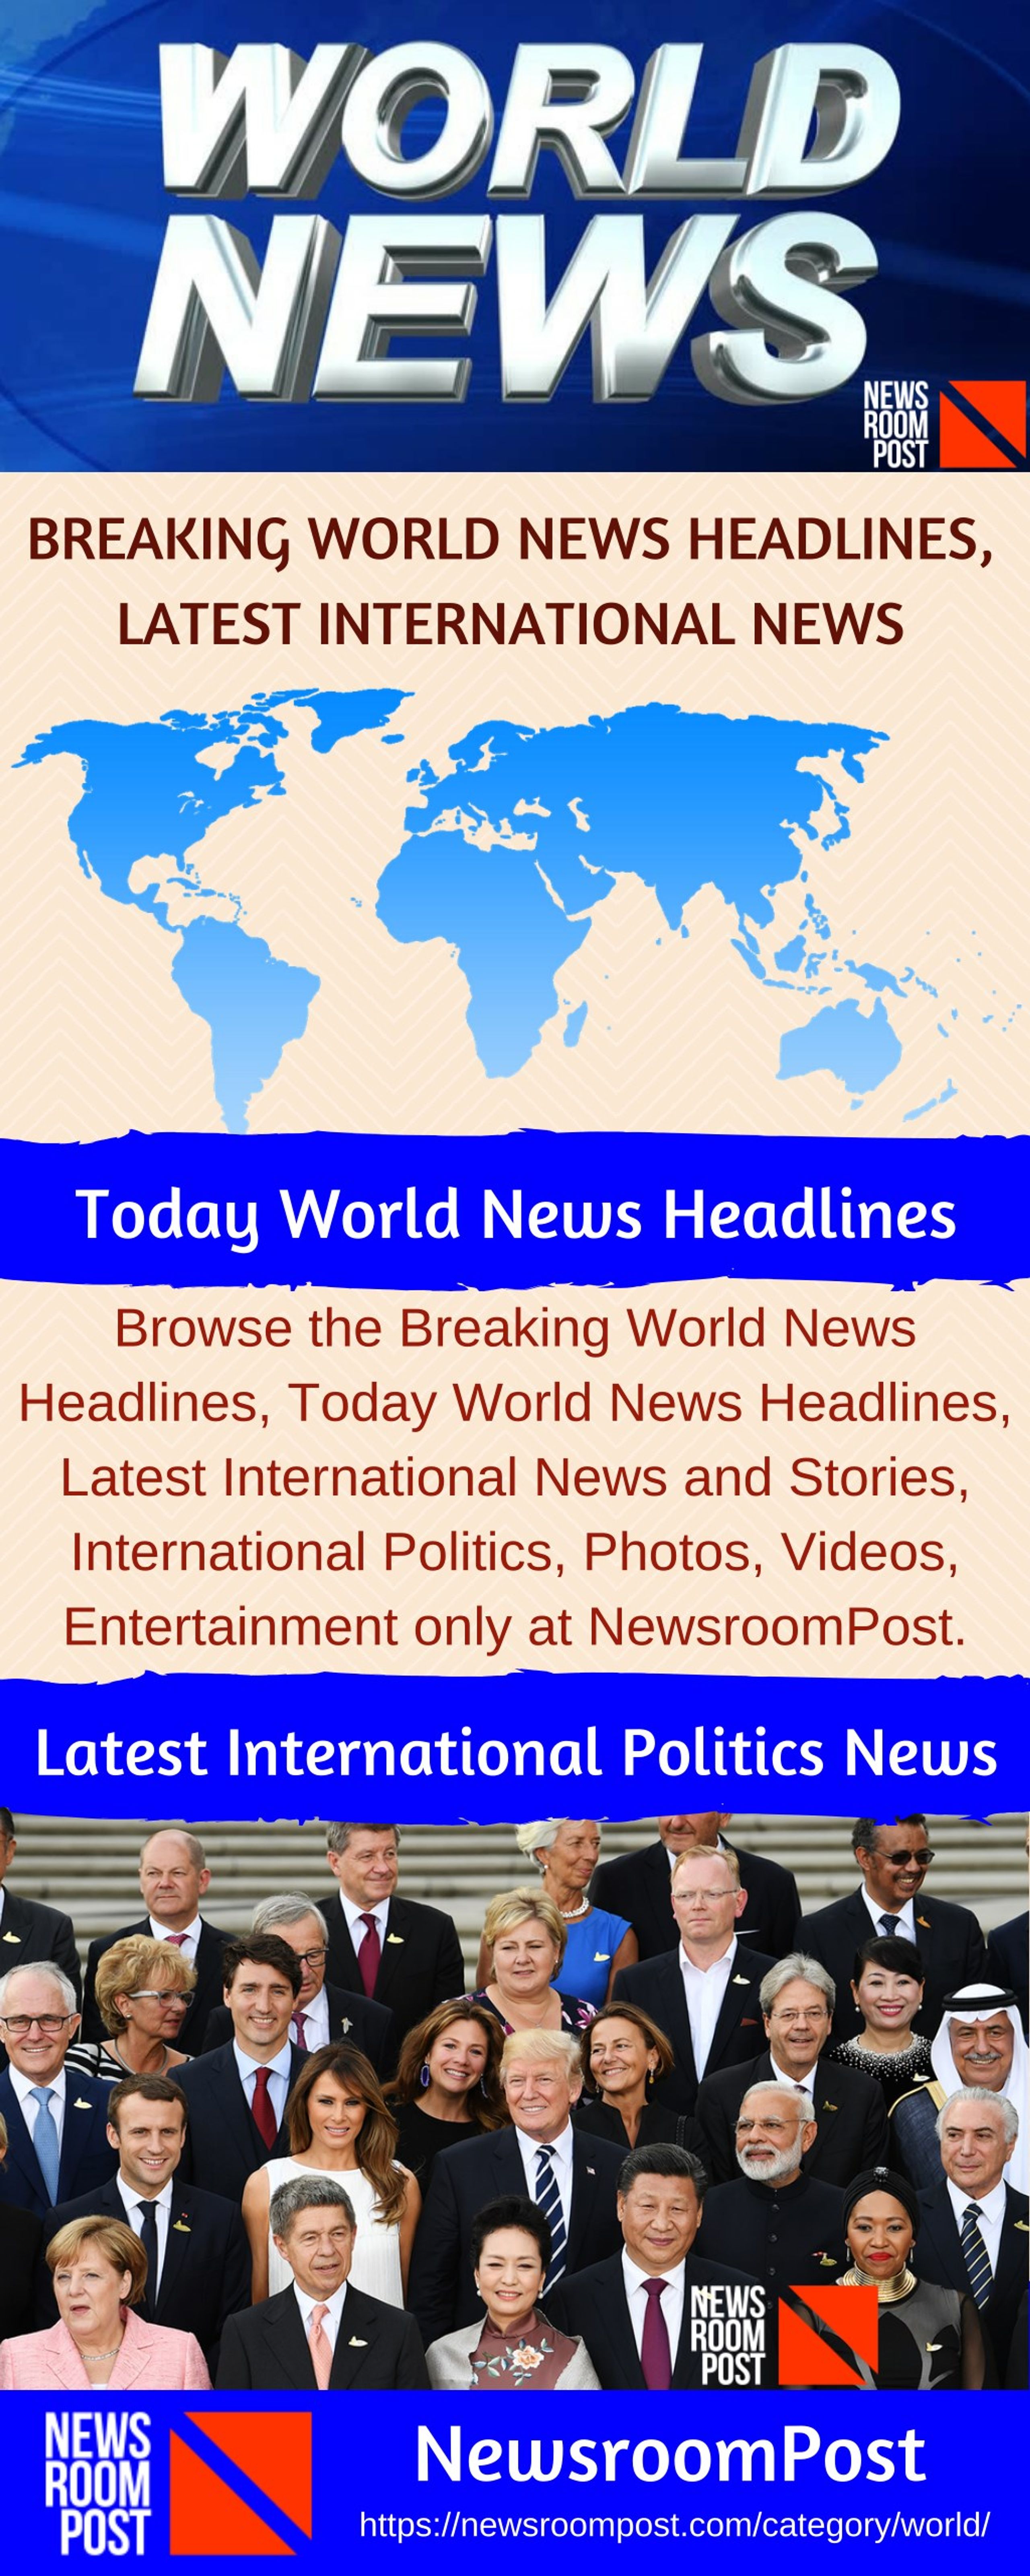 PPT Today World News Headlines, Breaking World News Headlines